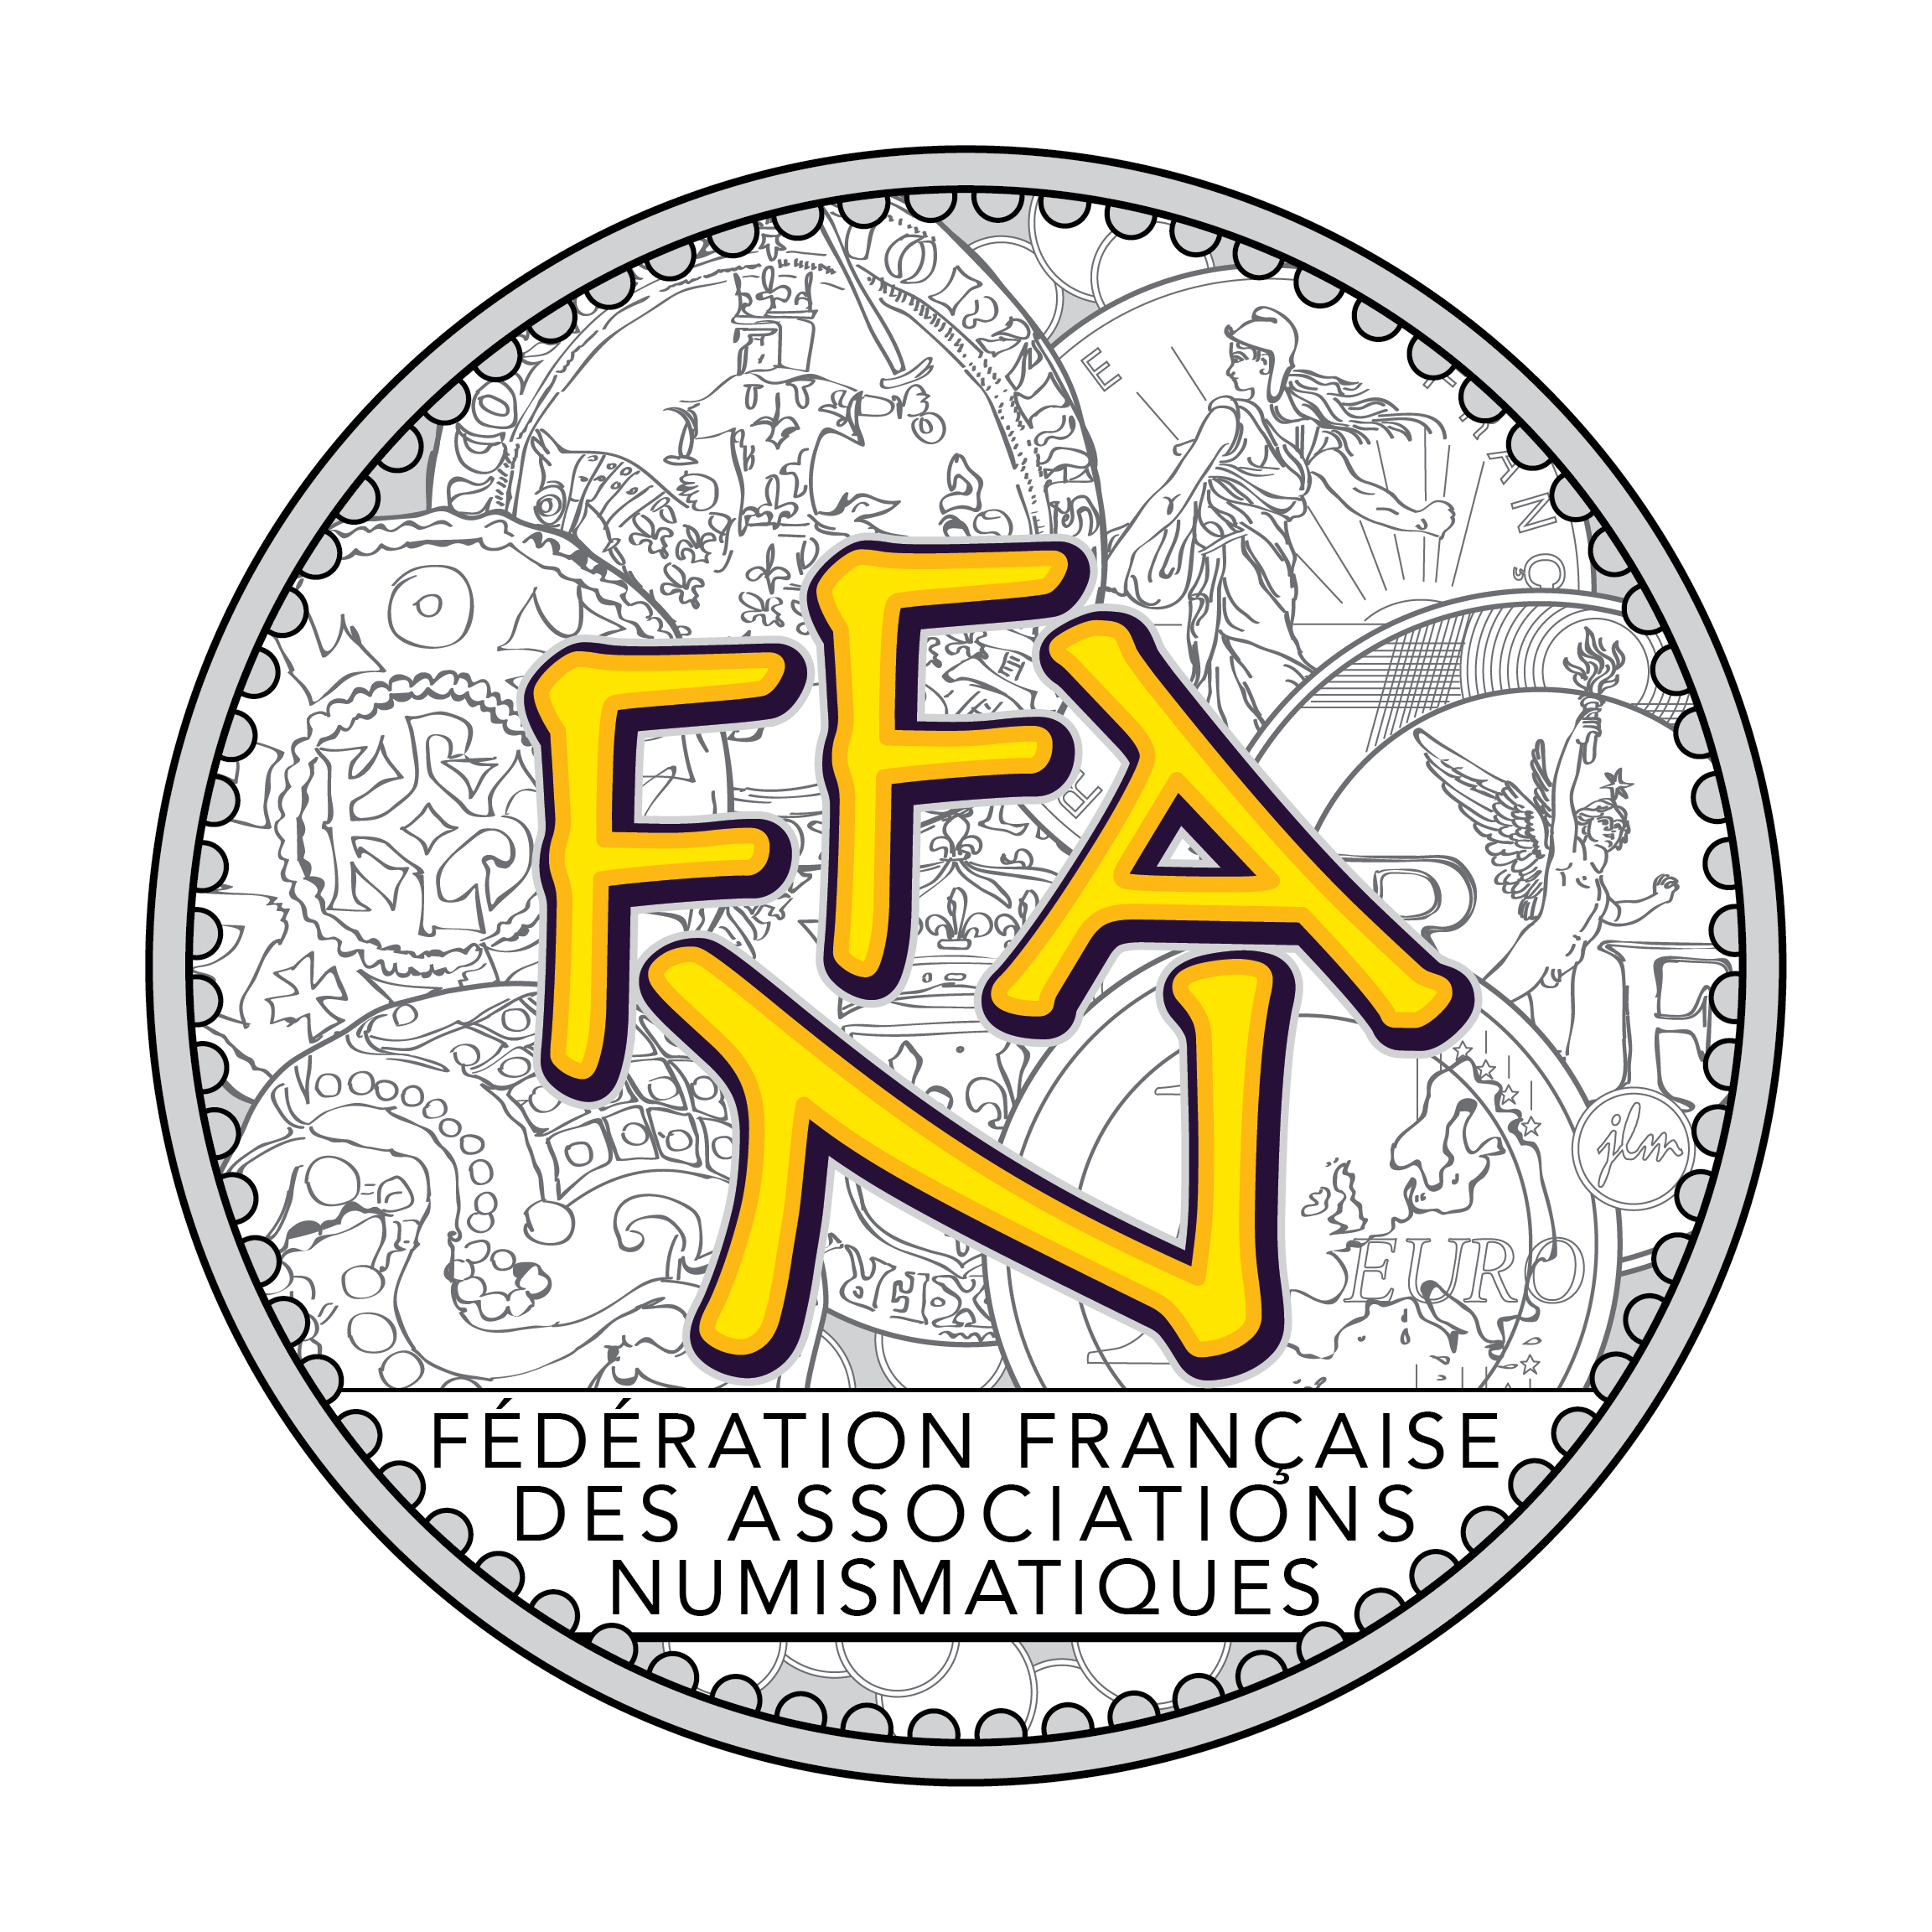 Logo FFAN 2018 definitif.png - 887,83 kB